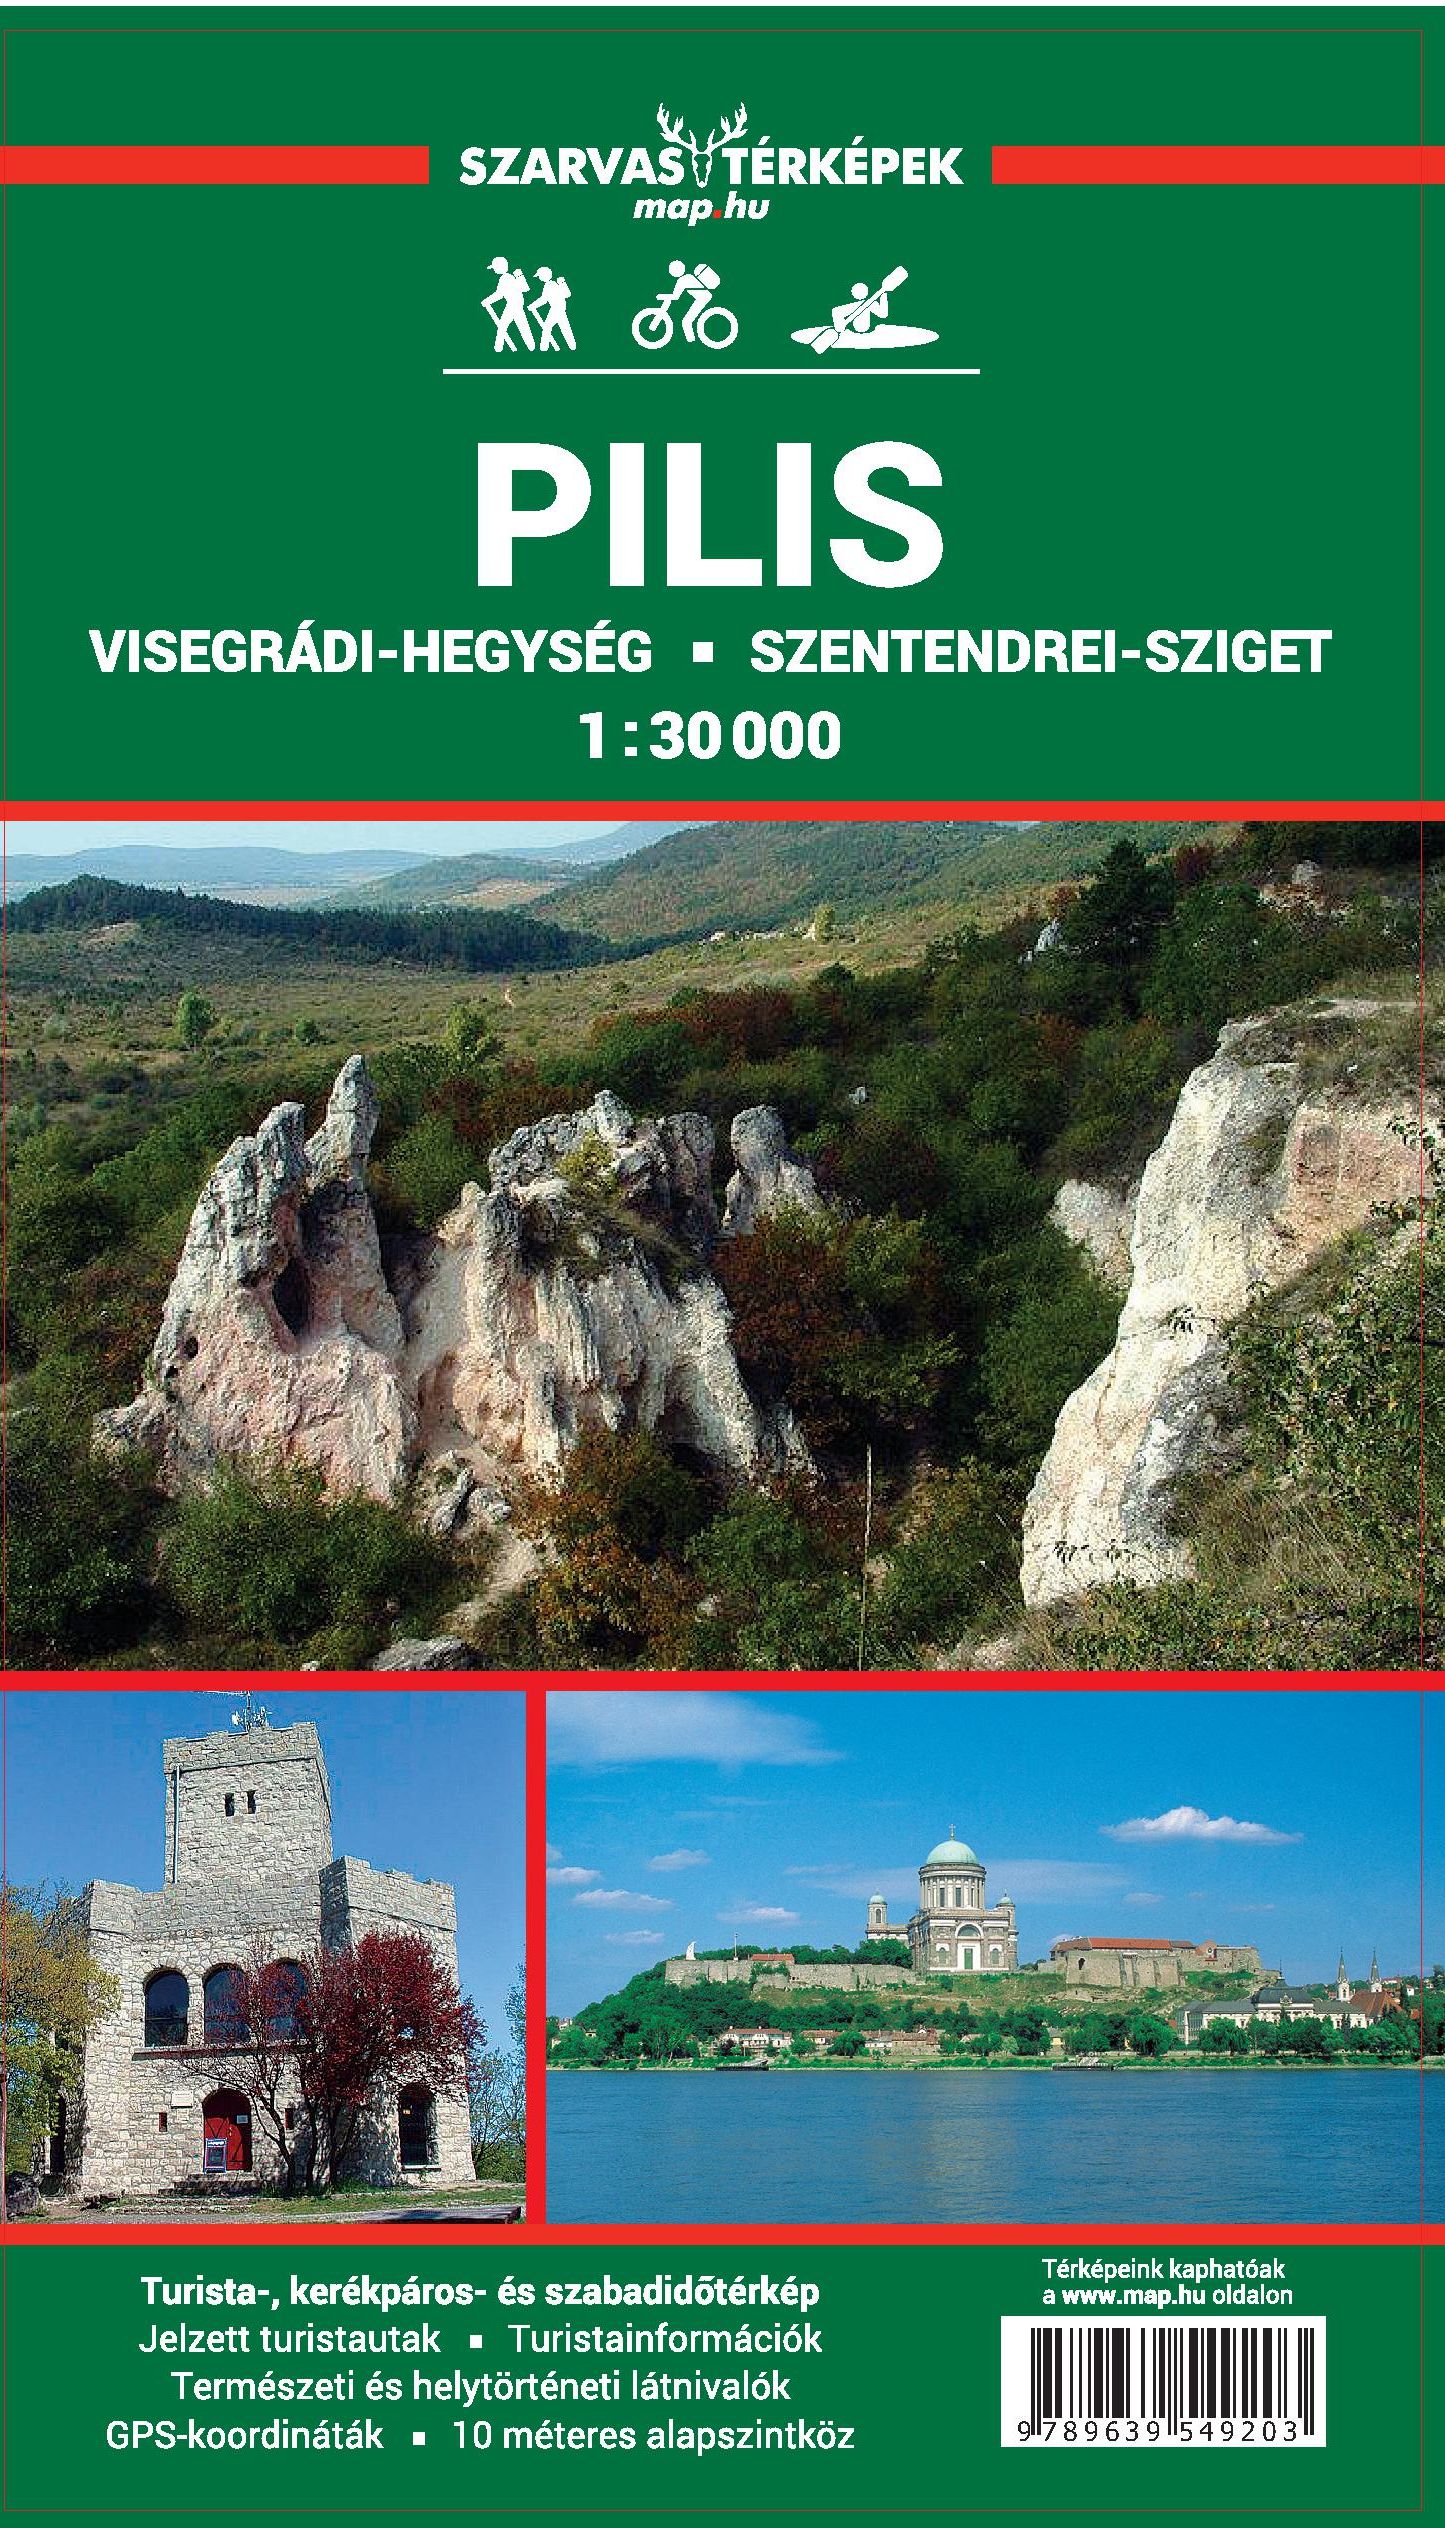 Detailed walking and biking info, GPS co-ordinates. Mini tourist guide with leisure time tips. Inset maps of Esztergom, 1.15.000, Szentendre 1.10.000, Visegrad 1:15.000.